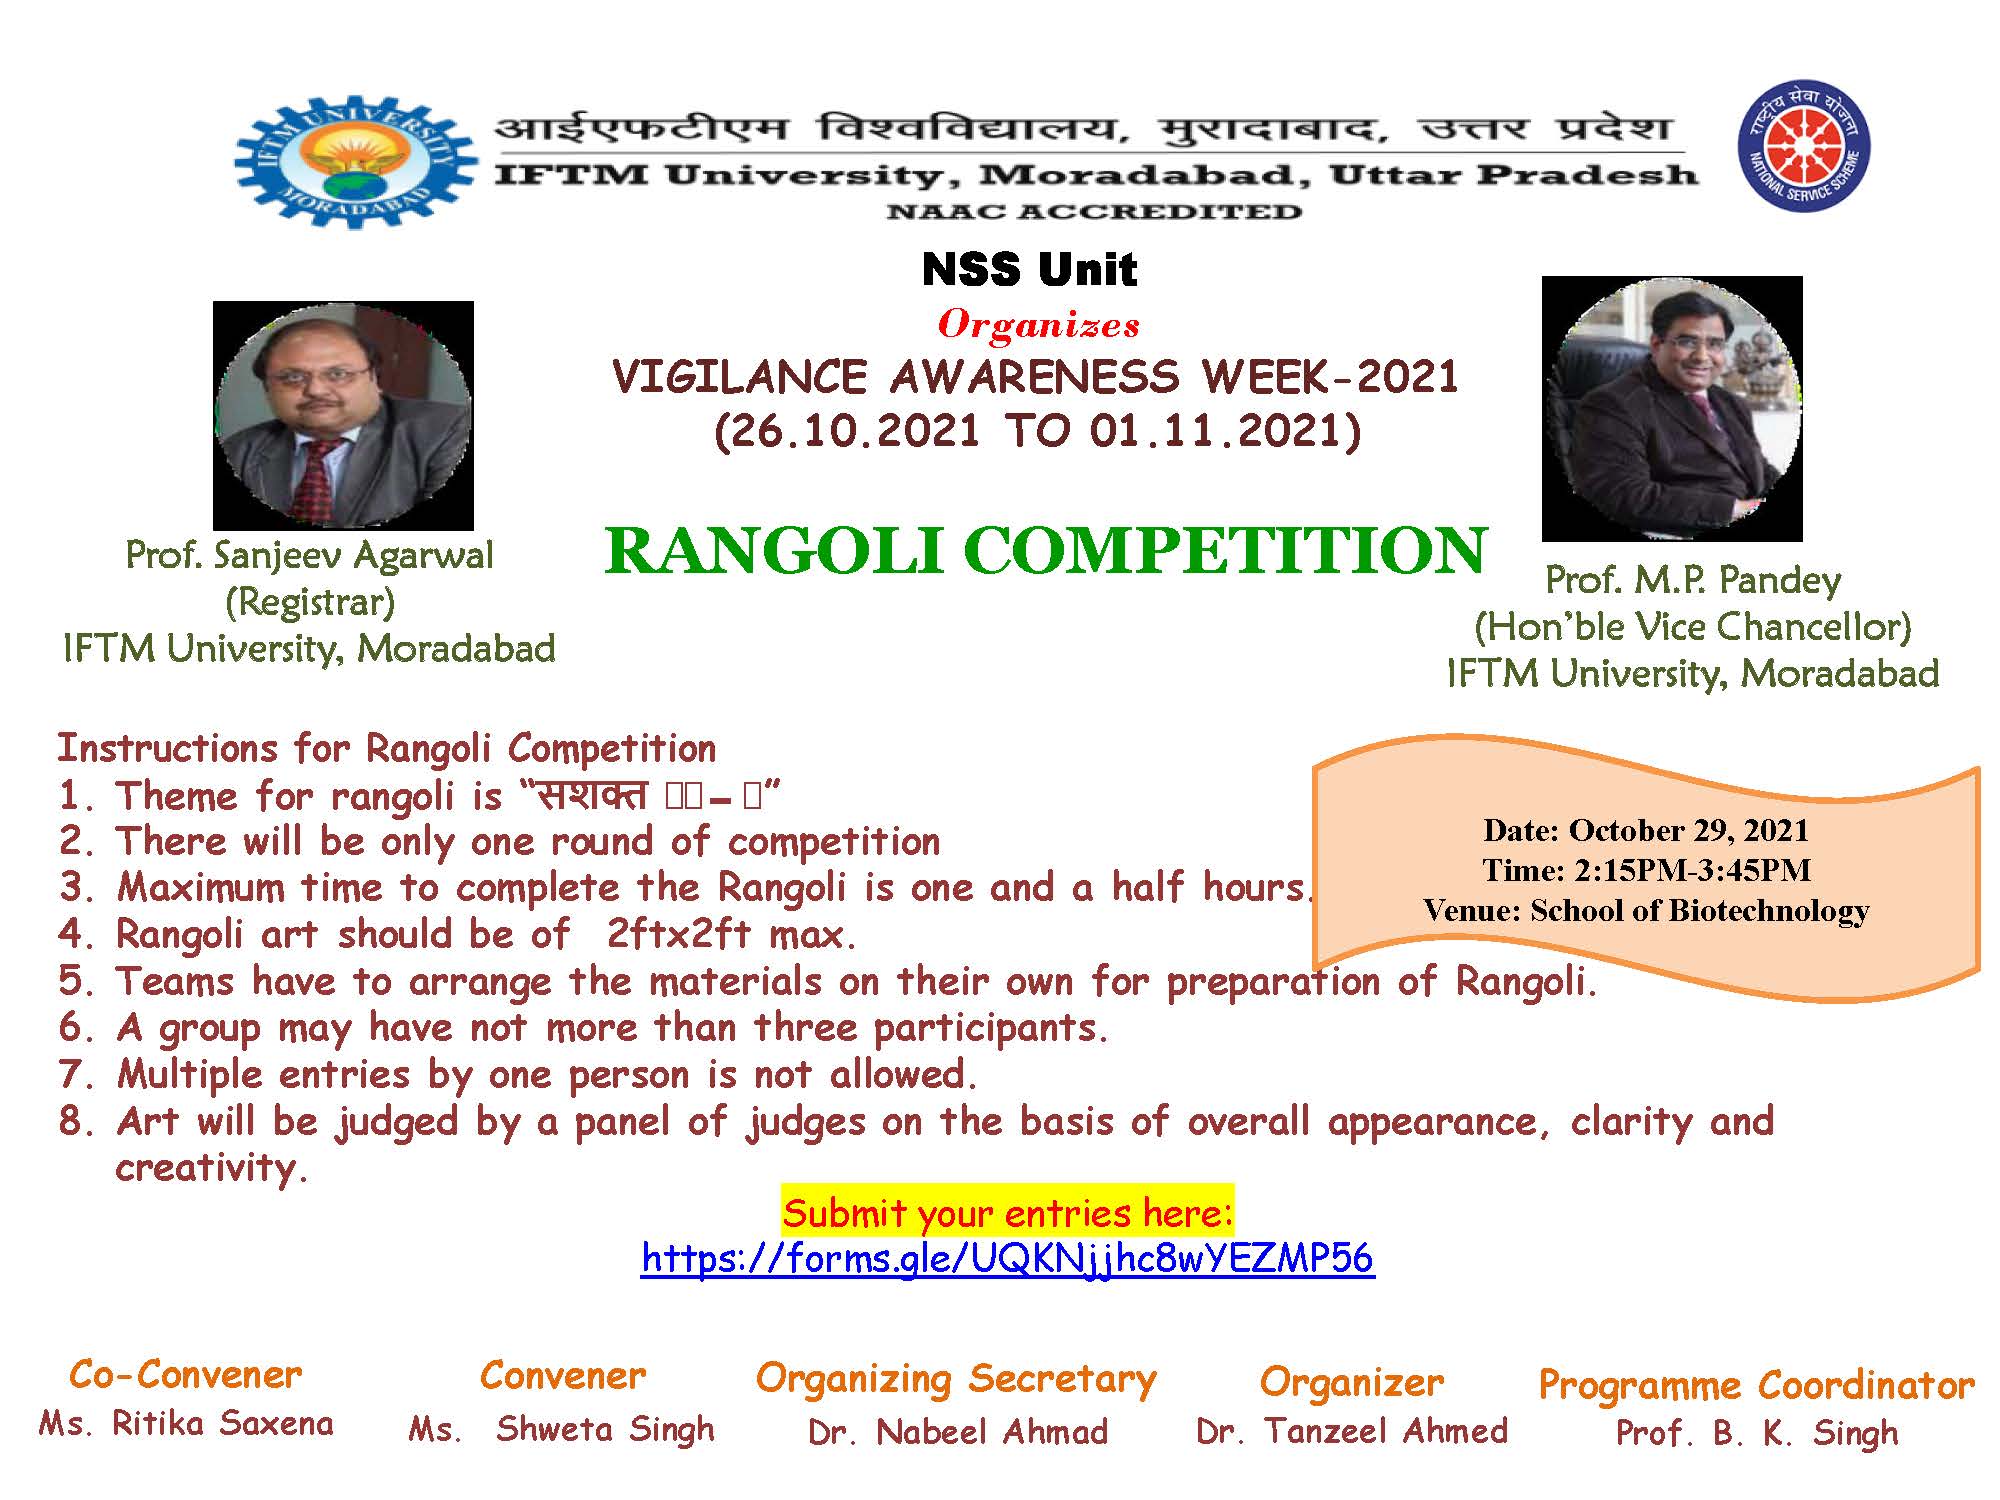 Rangoli Competition under Vigilance Awareness Week - 2021